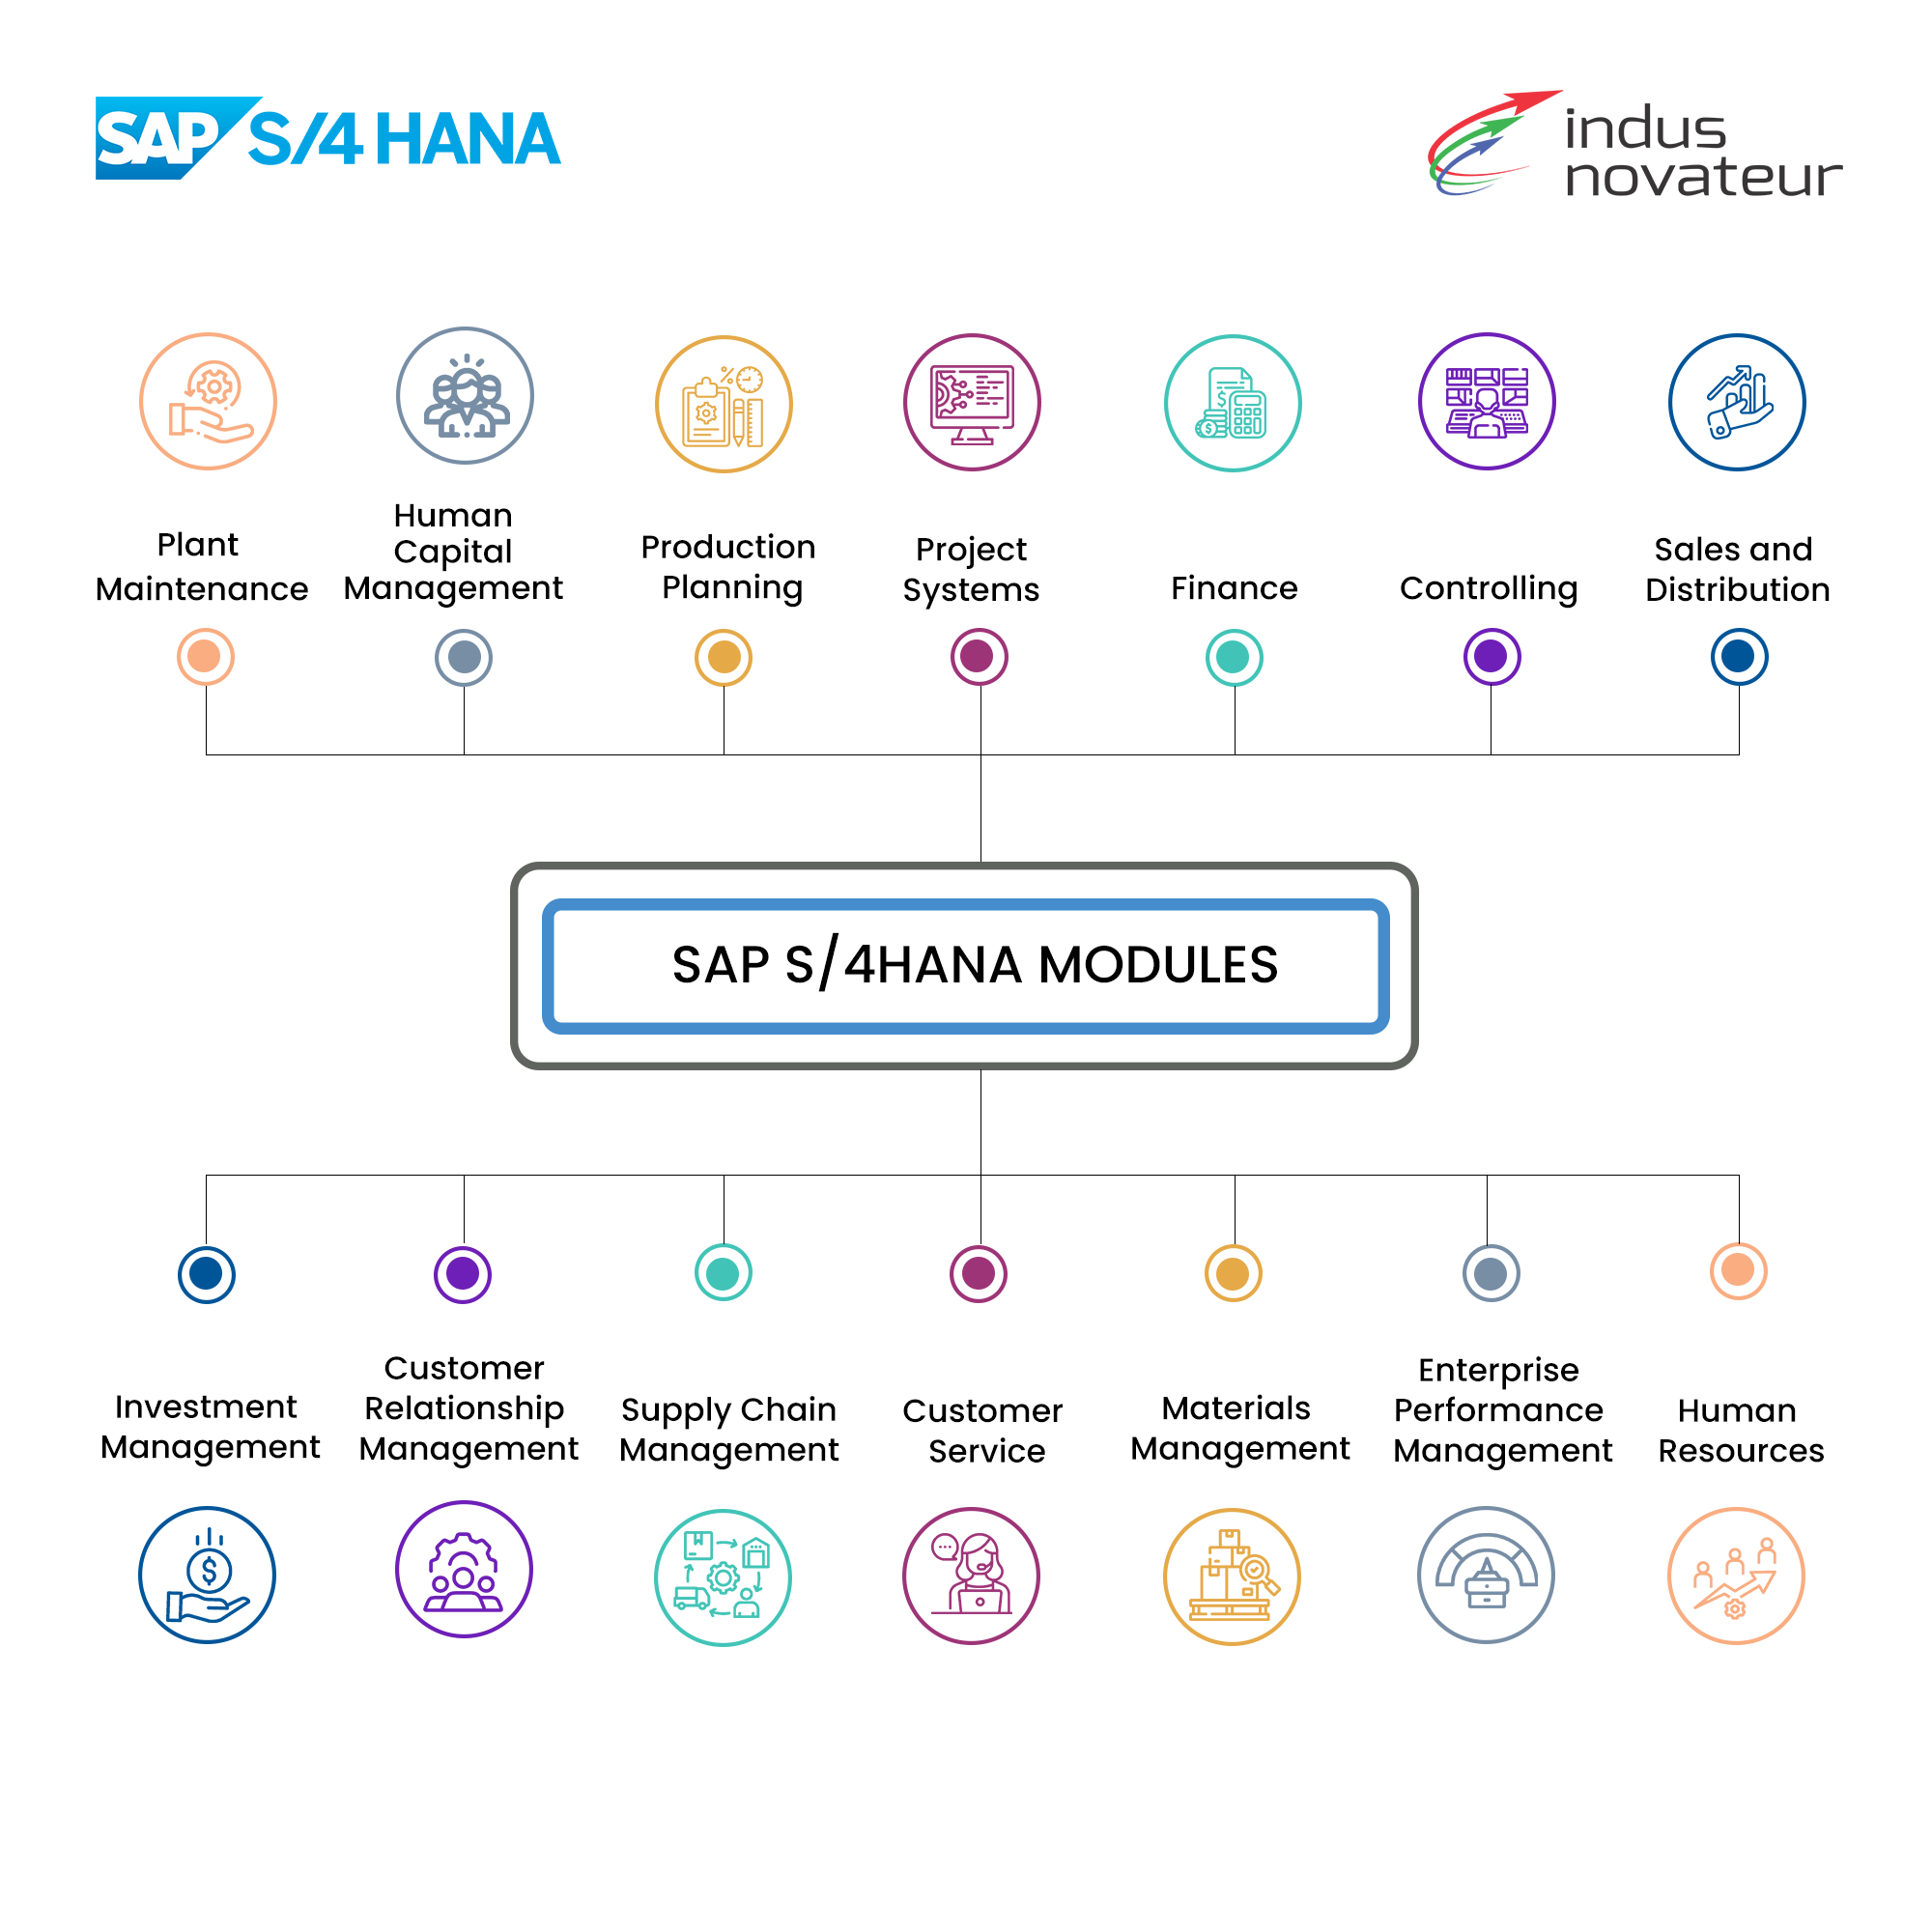 sap-s4hana-modules-indusnovateur